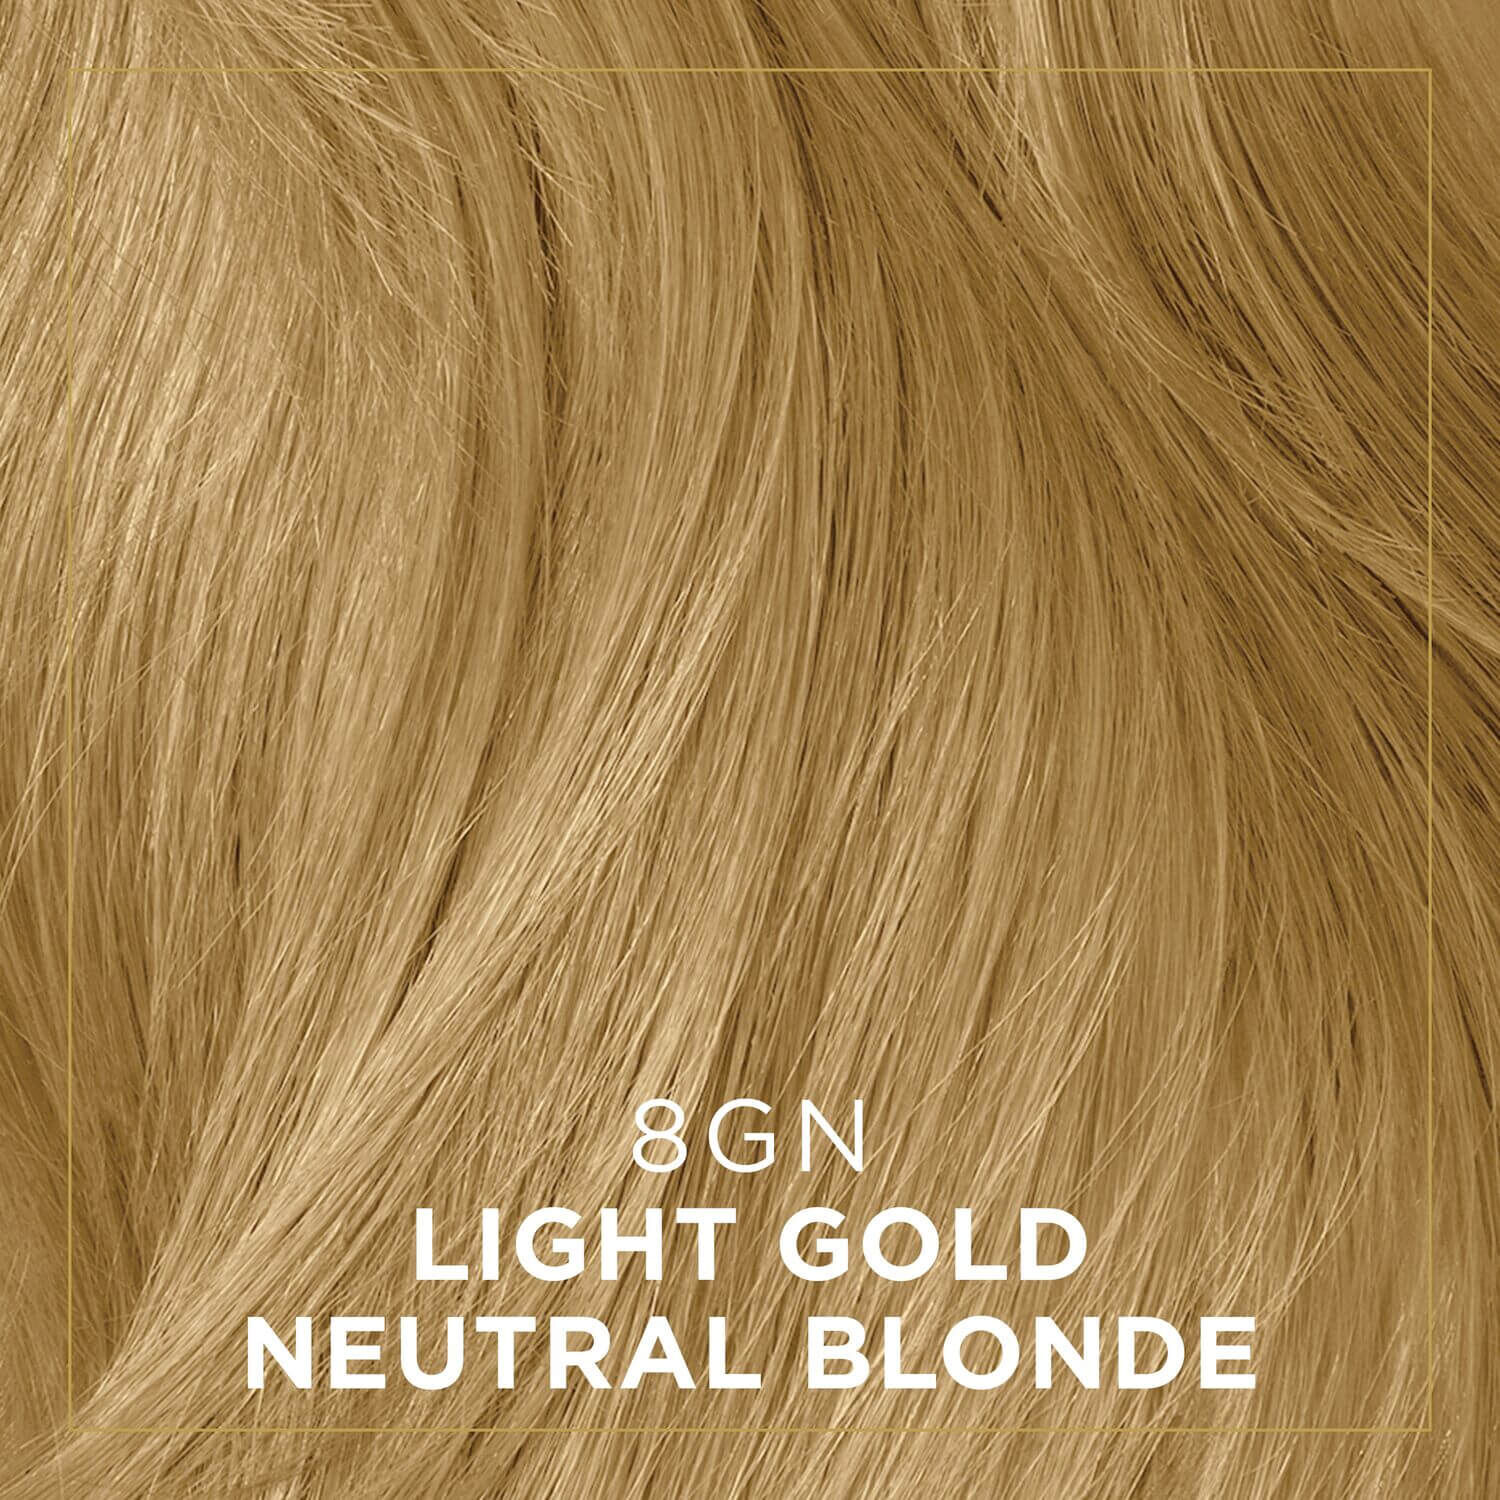 Soy4plex 8gn Light Gold Neutral Blonde Permanent Crème Hair Color By Clairol Professional 